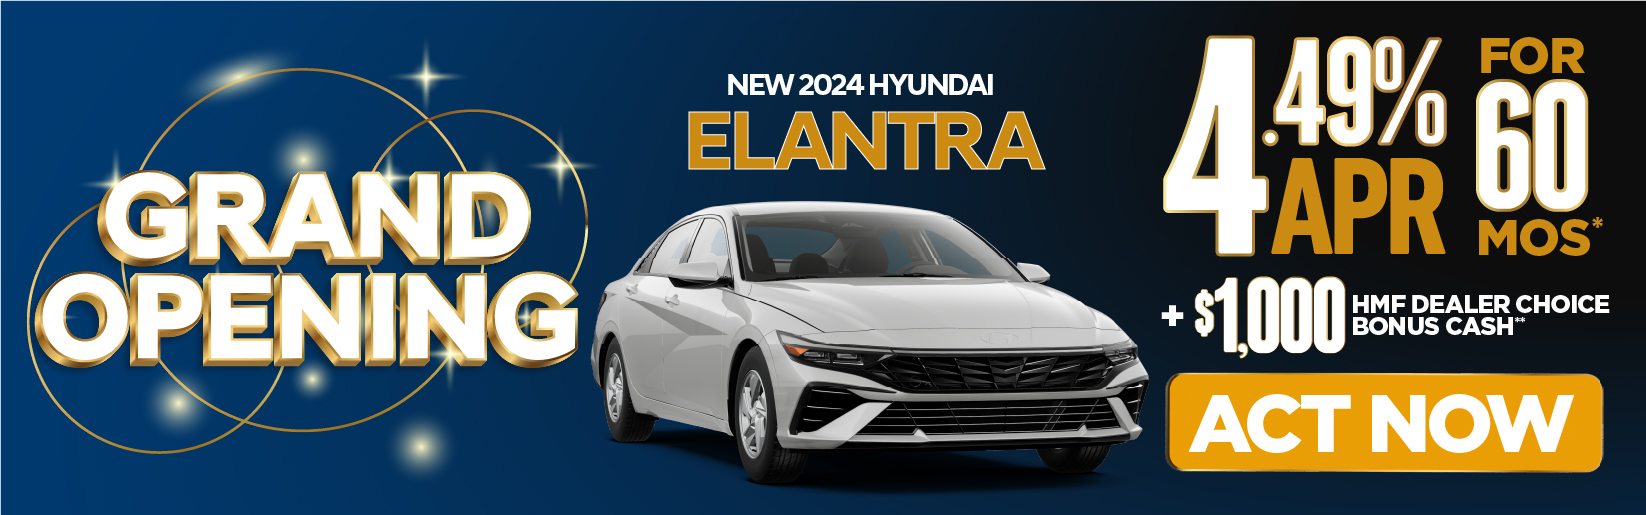 New 2024 Hyundai Elanta - 4.49% APR for 60 mos* + $1000 HMF Dealer Choice Bonus Cash** - Act Now